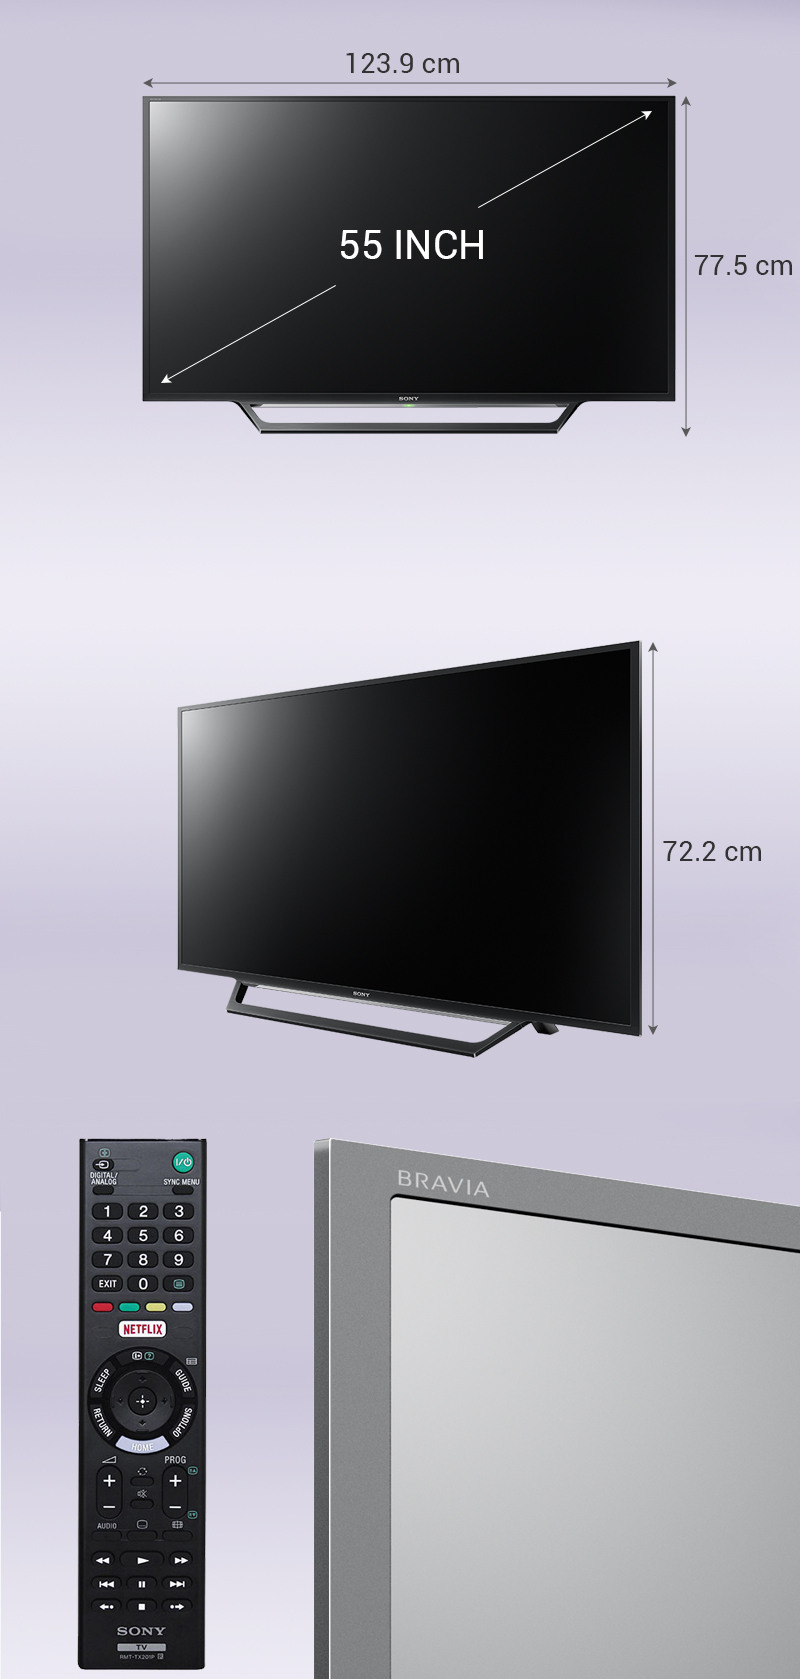 Smart Tivi Sony 55 inch KDL-55W650D - Kích thước TV